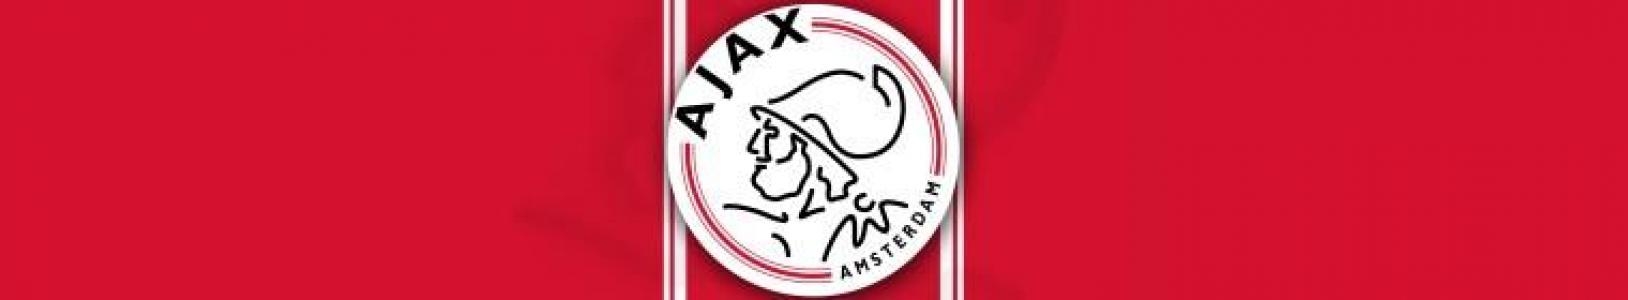 Club Football 2005: AJAX banner